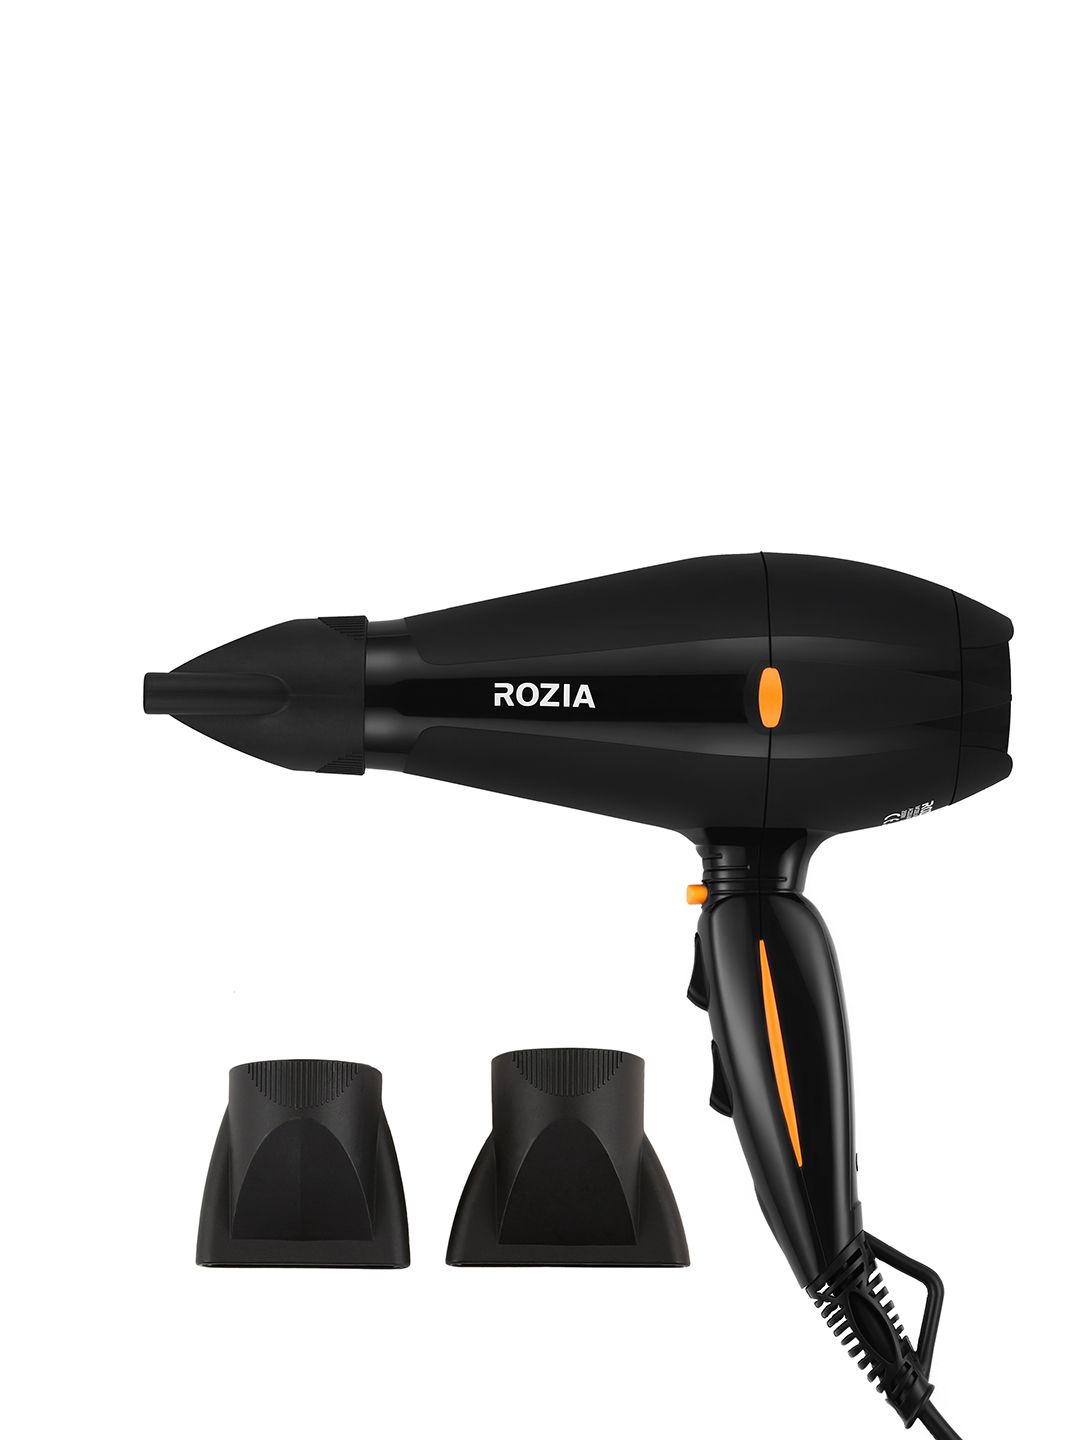 Rozia Black Professional Pro AC Motor Hair Dryer HC8201 Price in India